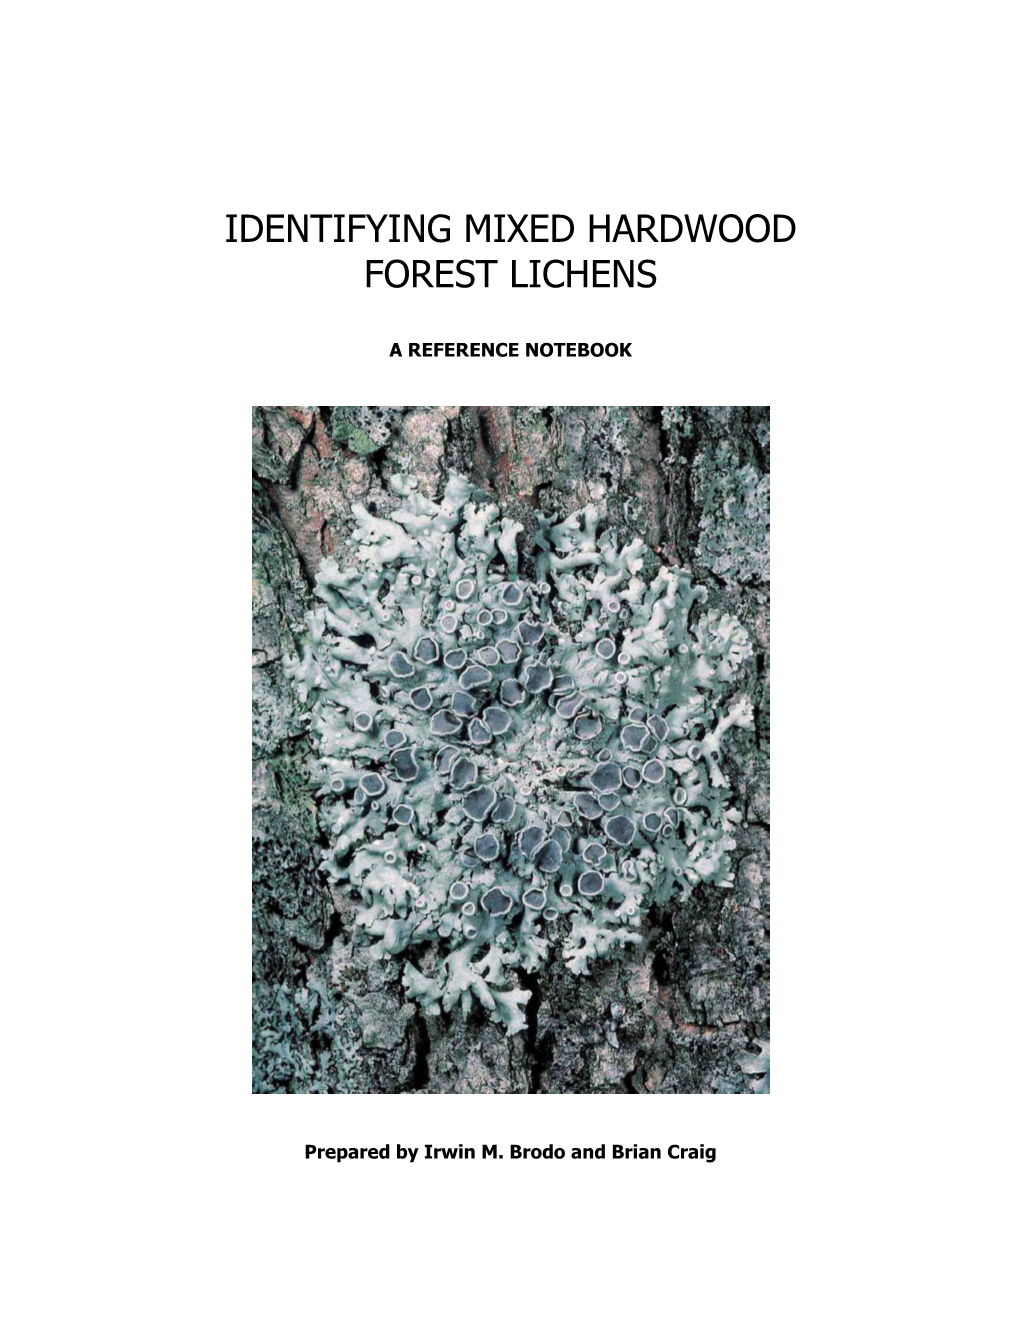 Identifying Mixed Hardwood Forest Lichens